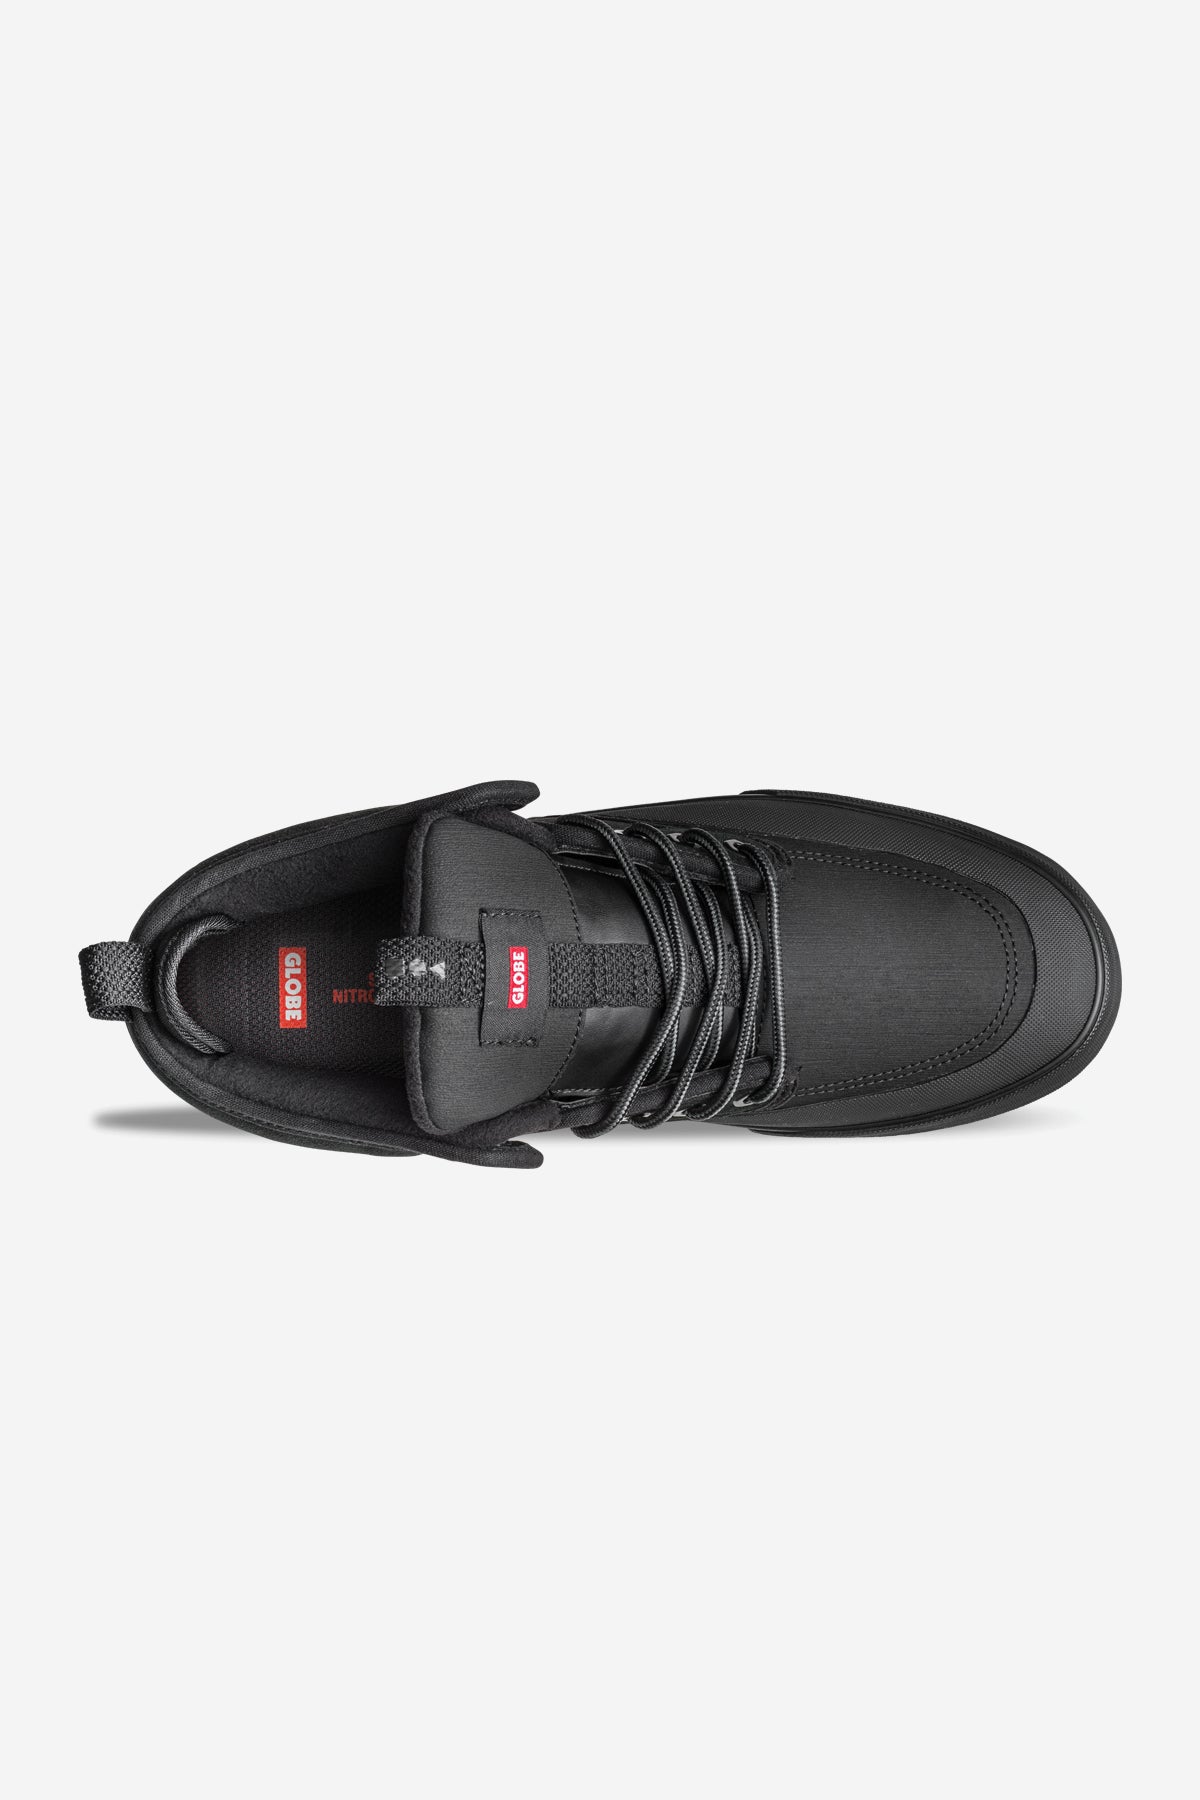 motley mid black black summit skateboard chaussures